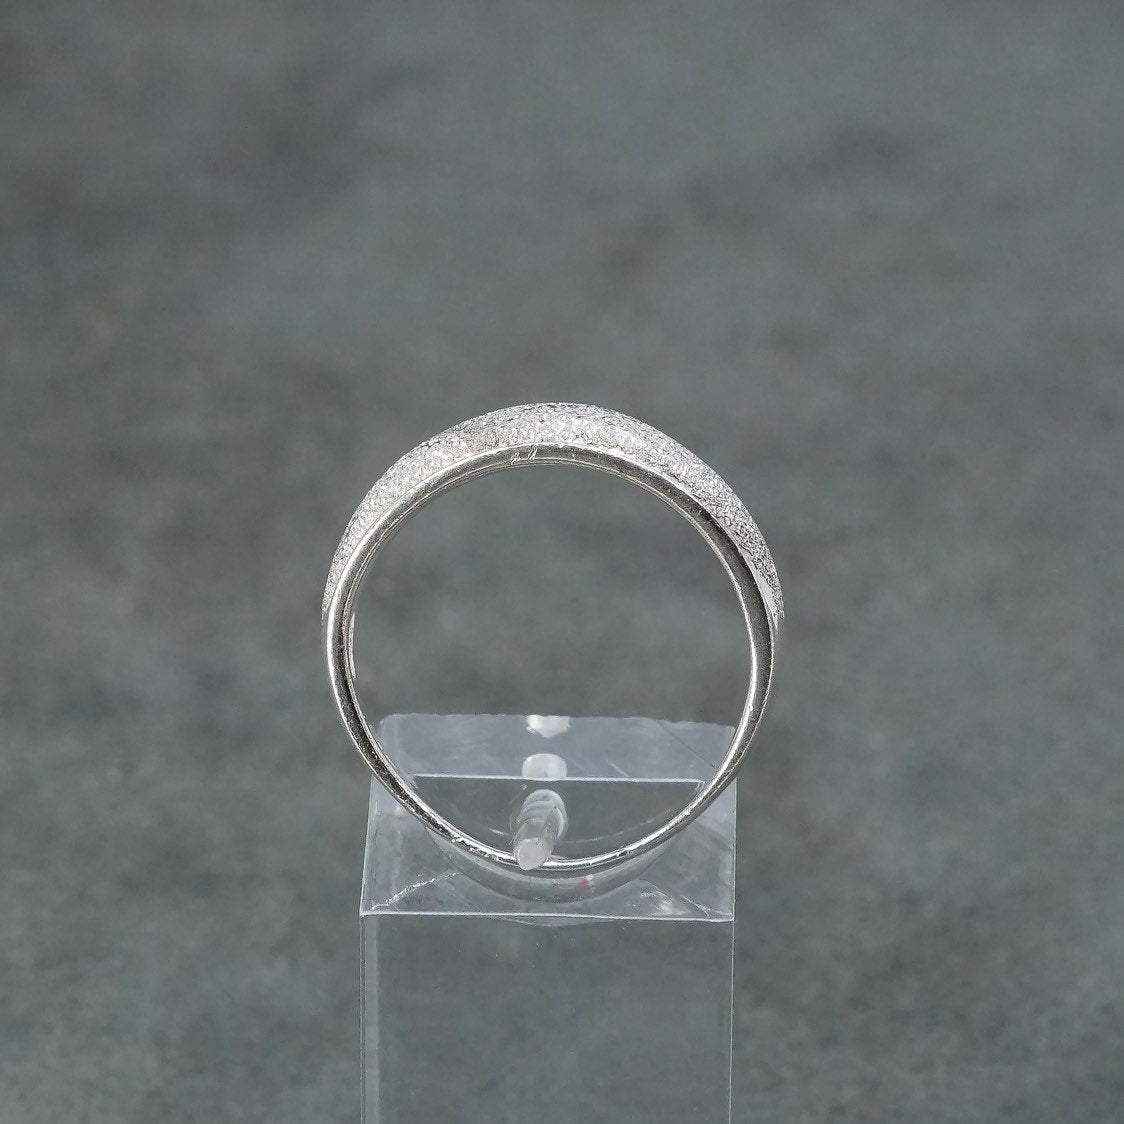 sz 9.25, vtg Sterling silver handmade ring, Mexican 925 band w/ Matt surface